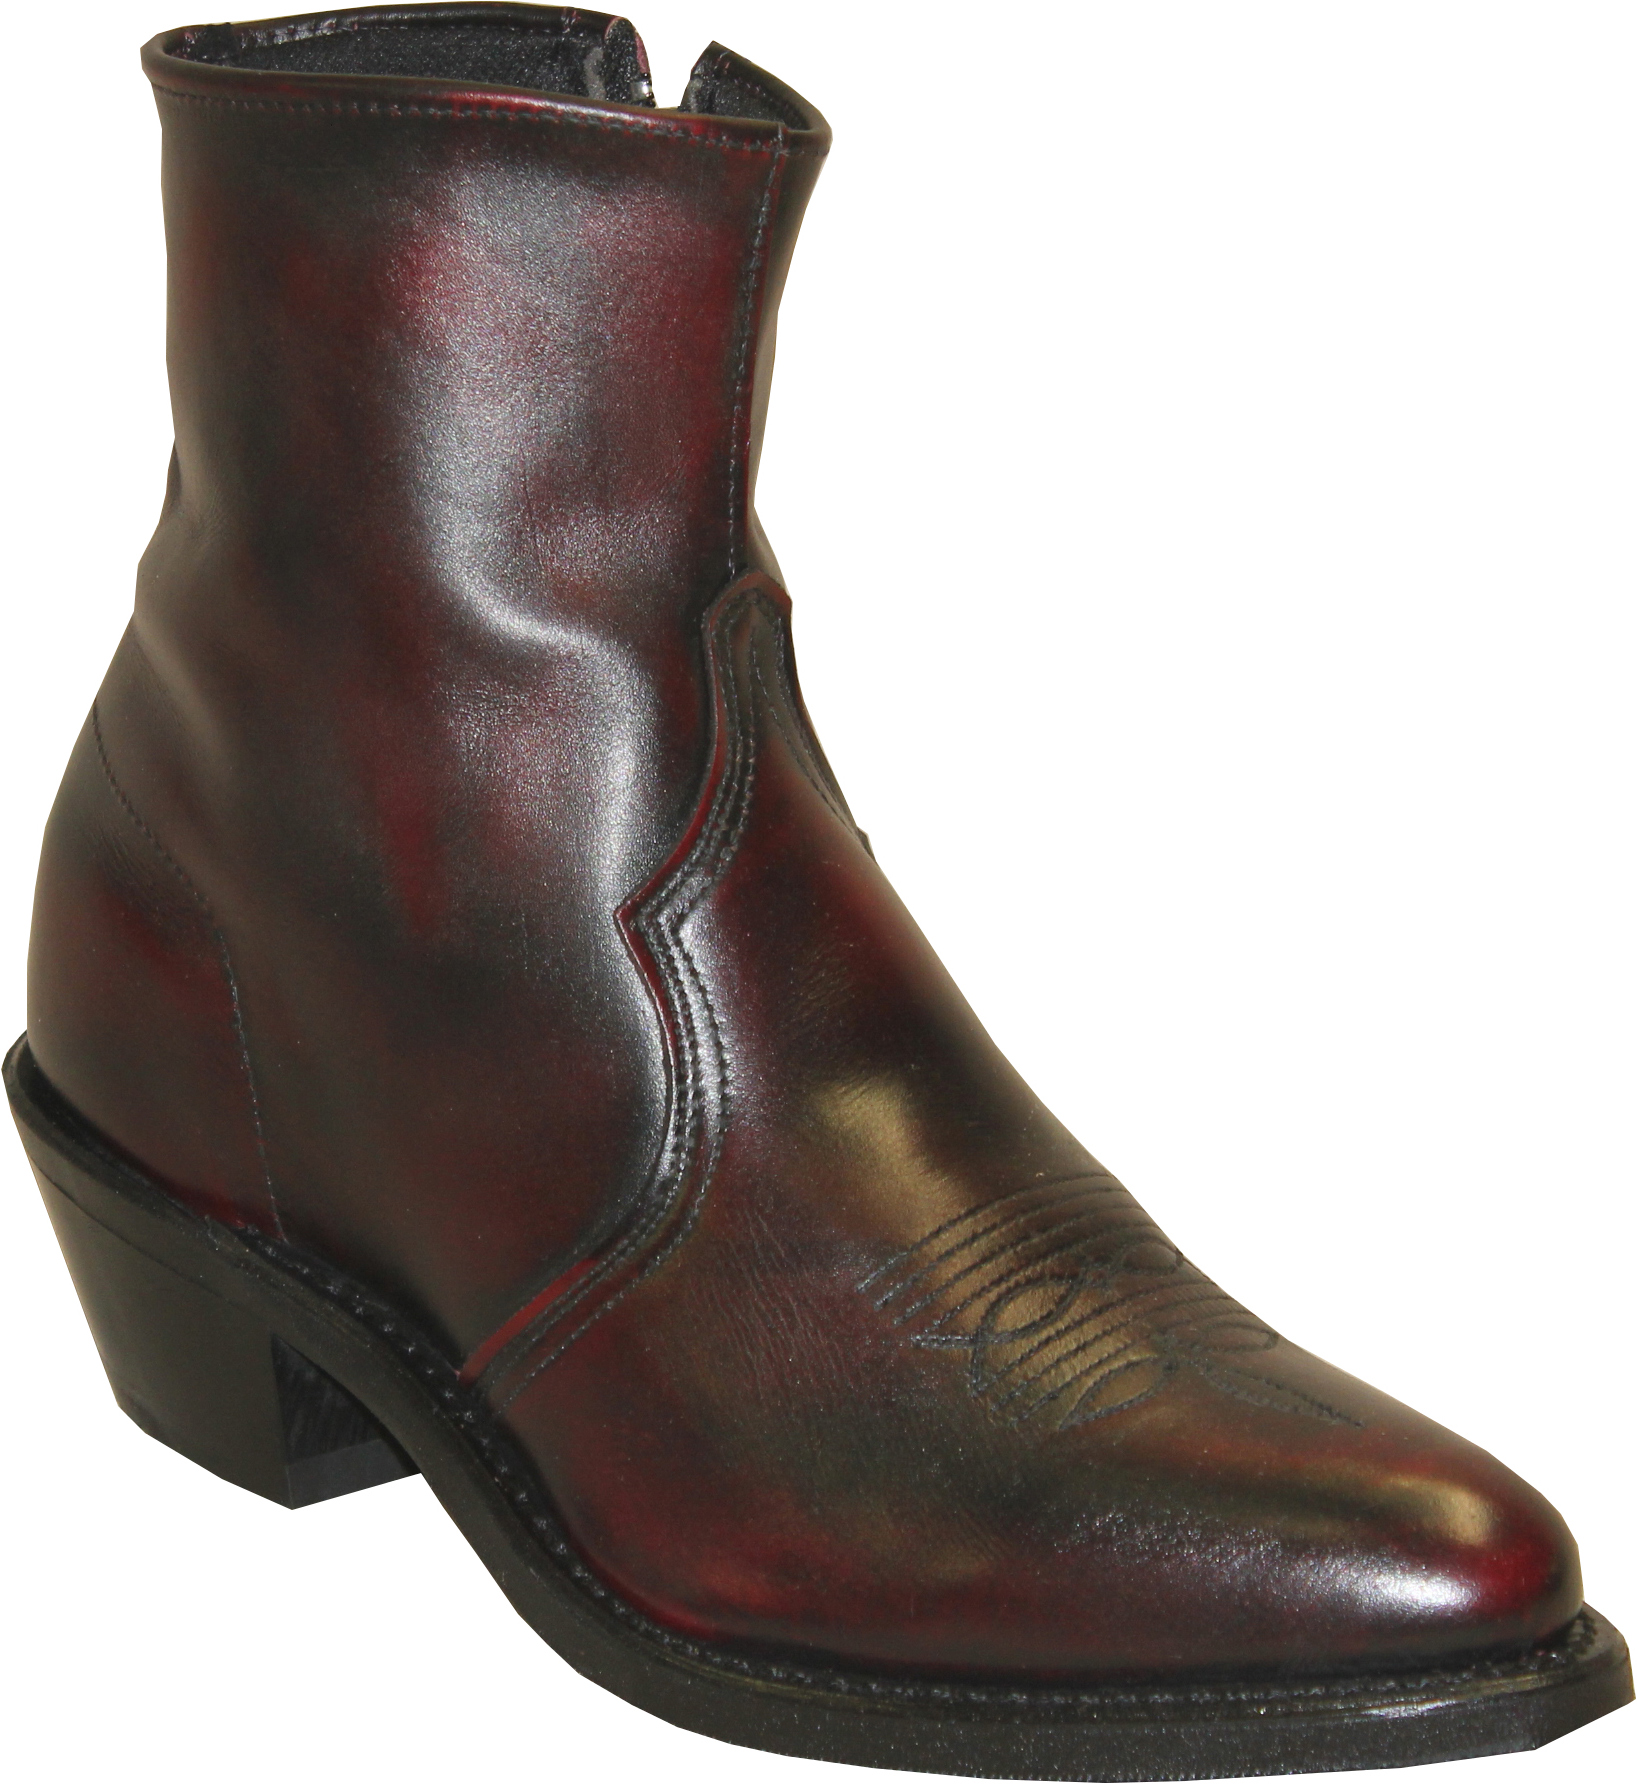 Men's Zipper & Shoe Boots